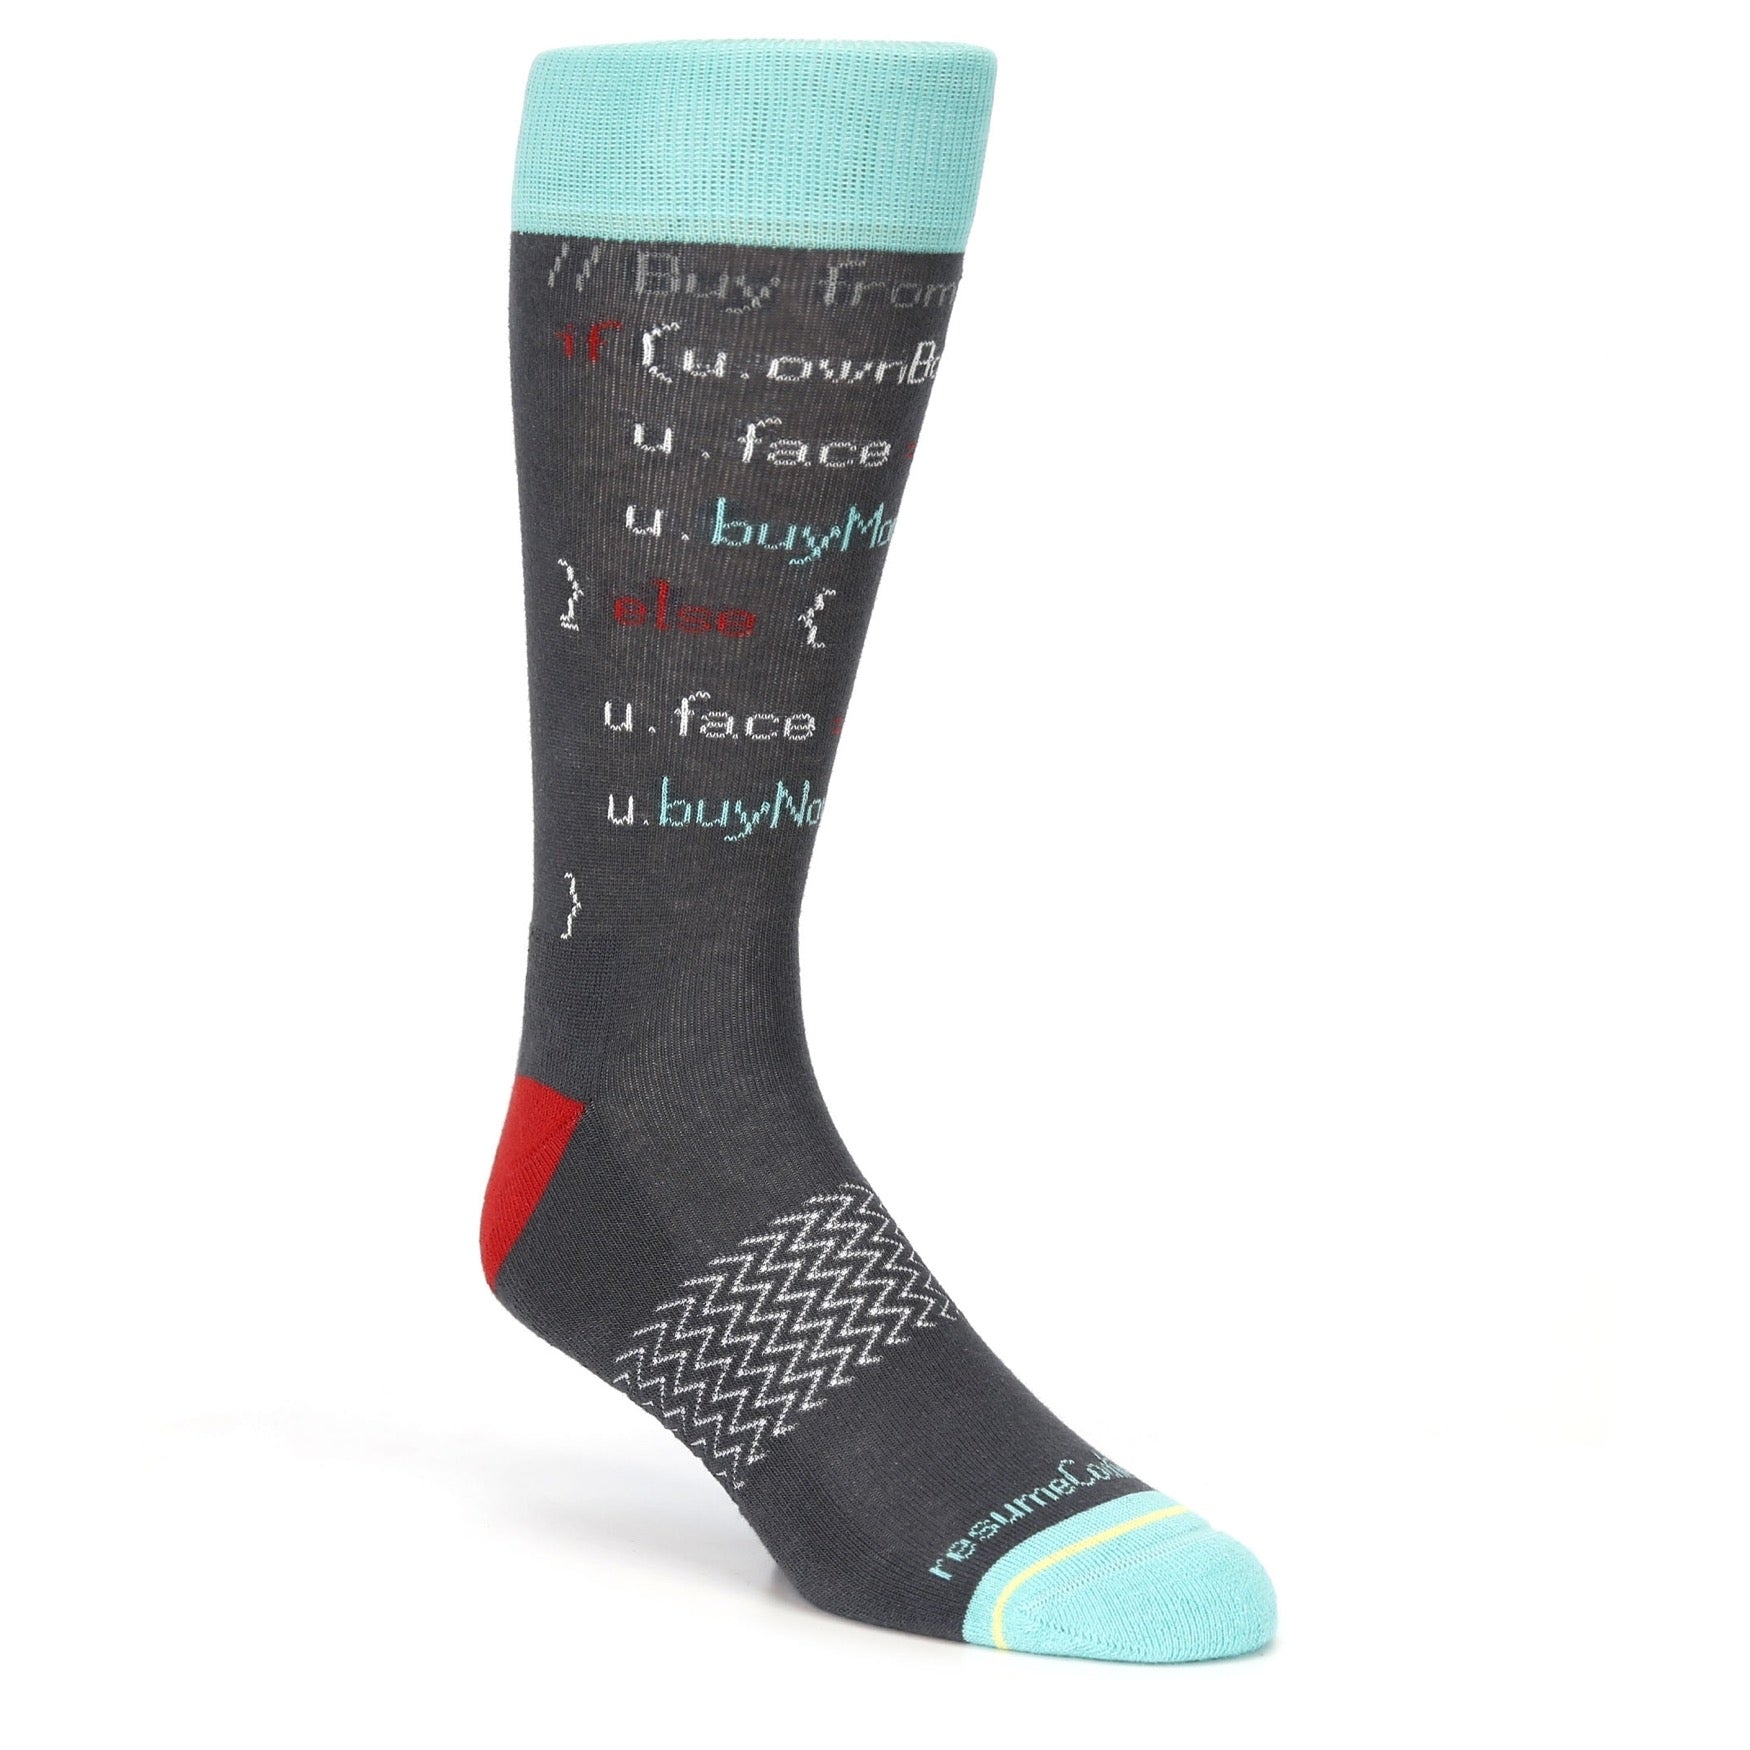 Programming Code Socks - Men's Premium Dress Socks